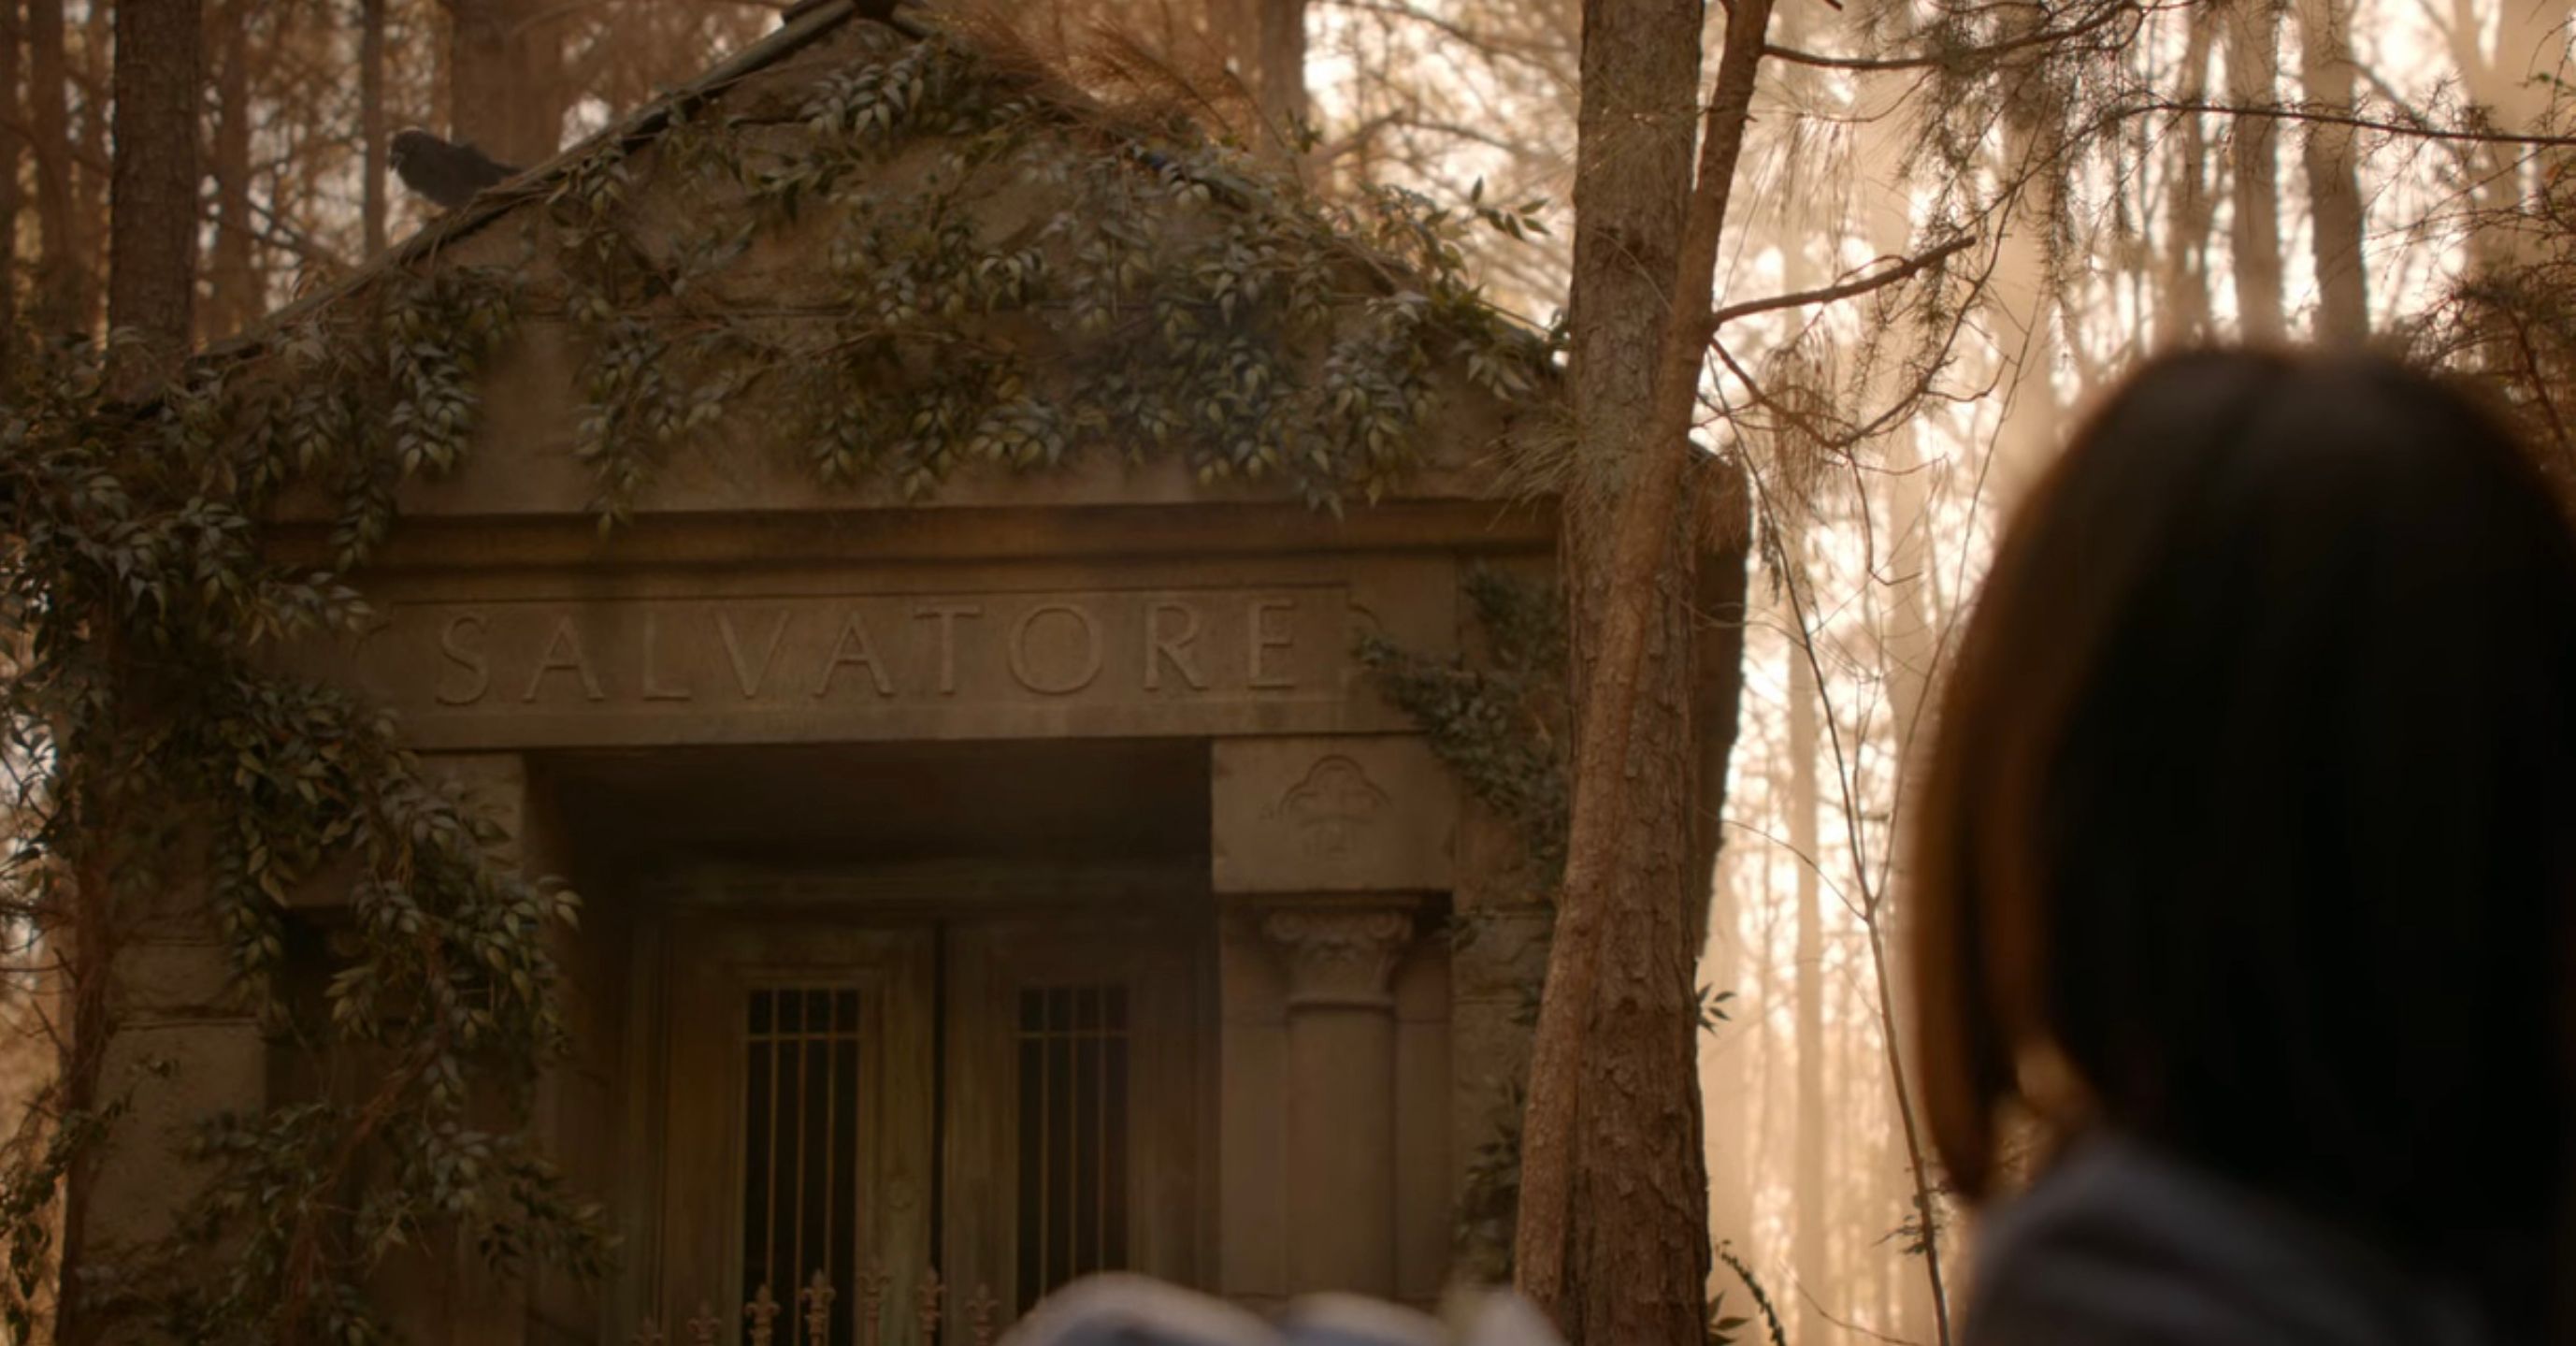 Elena writing in the graveyard in The Vampire Diaries.